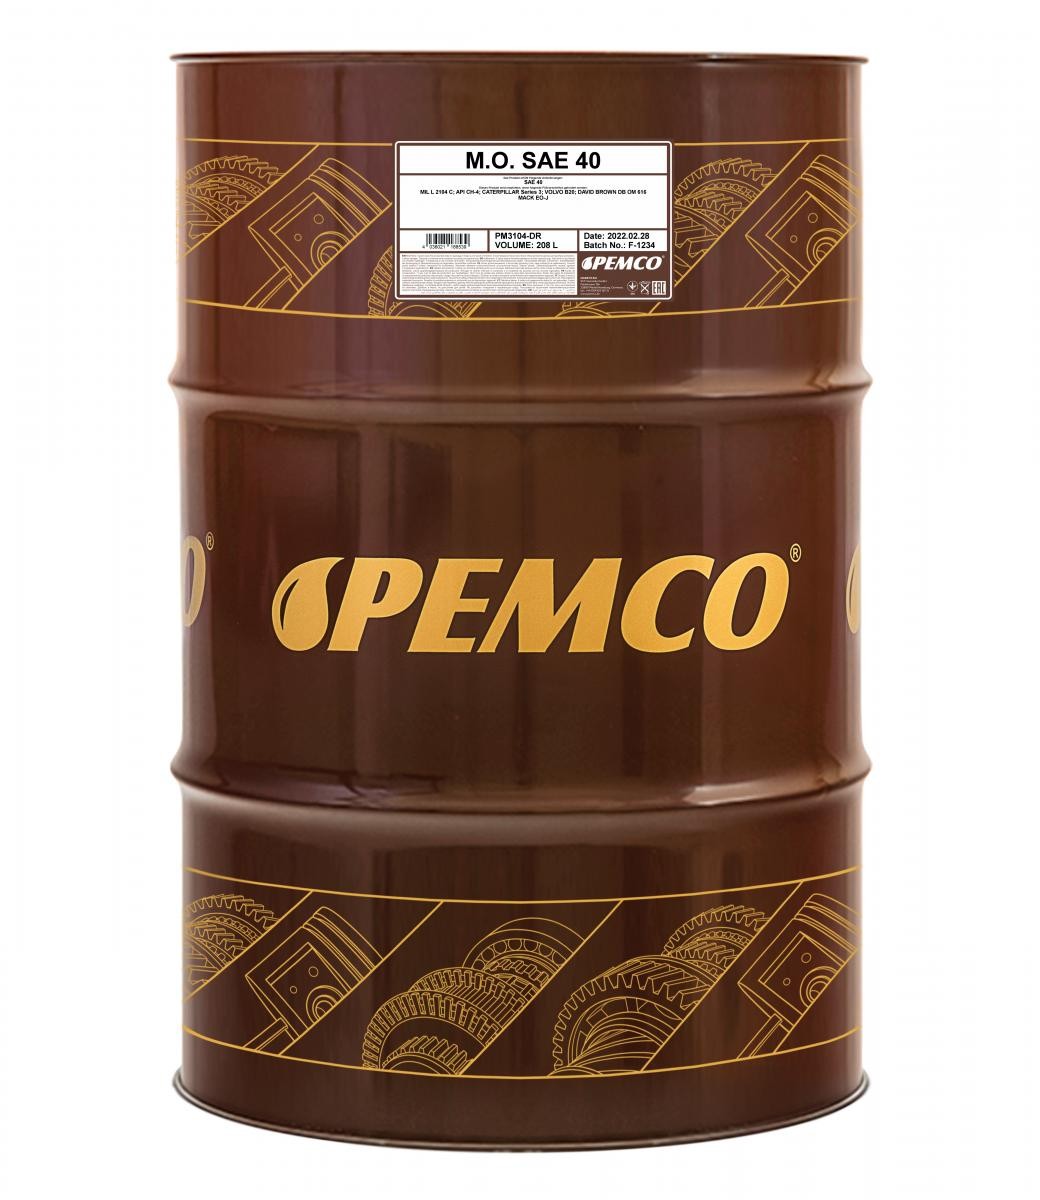 Engine oil MIL-L-2104 C PEMCO - PM3104-DR M.O. SAE 40